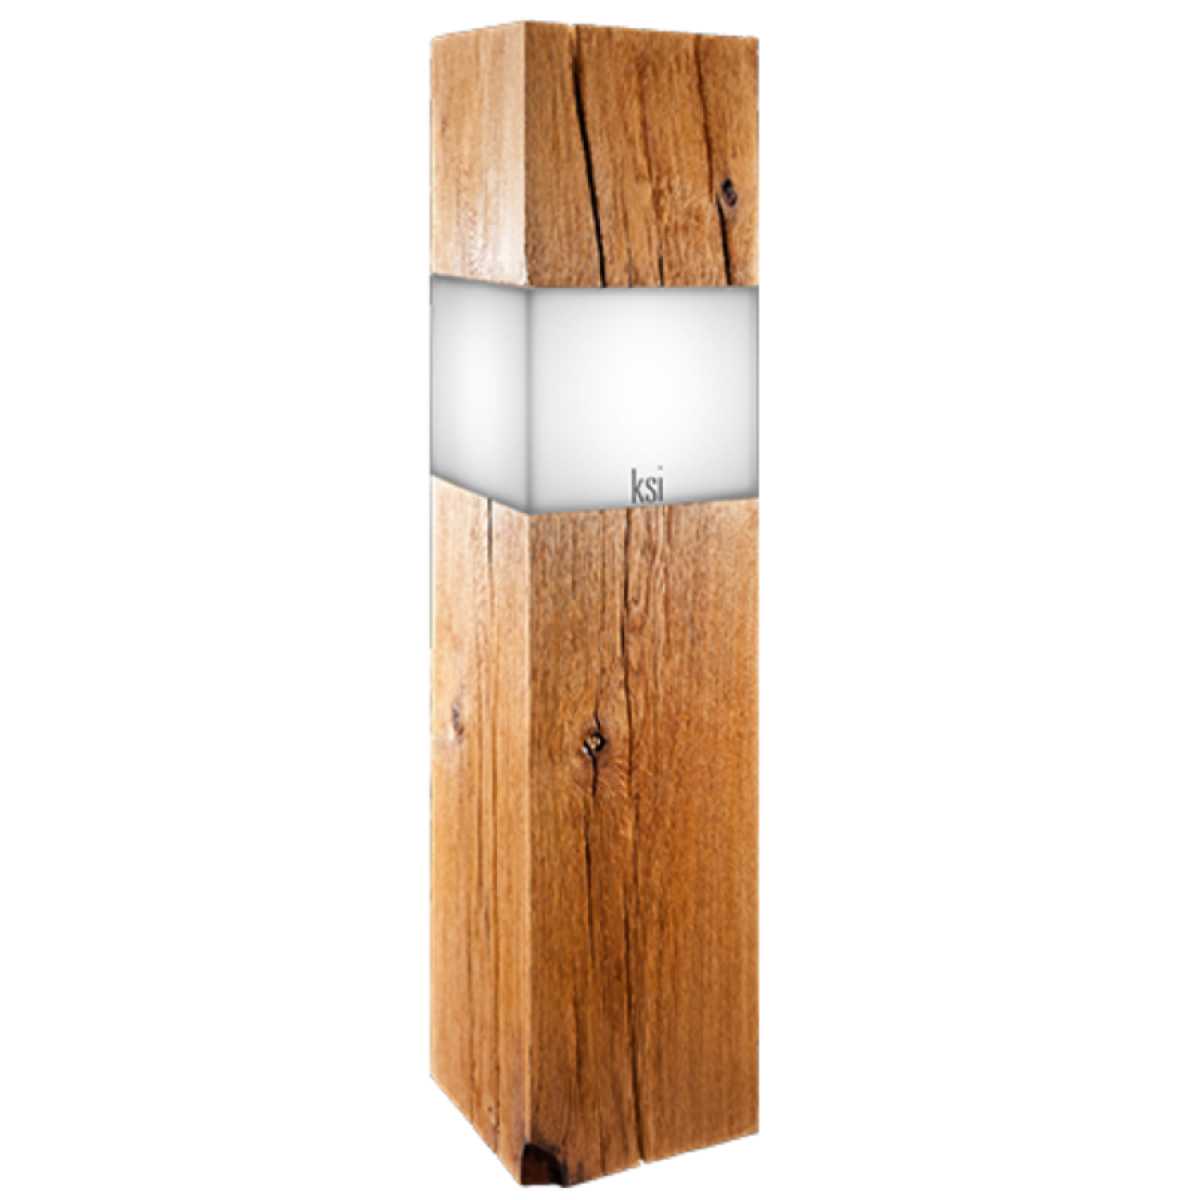 KSI Old oak XXL 1 Table Lamp